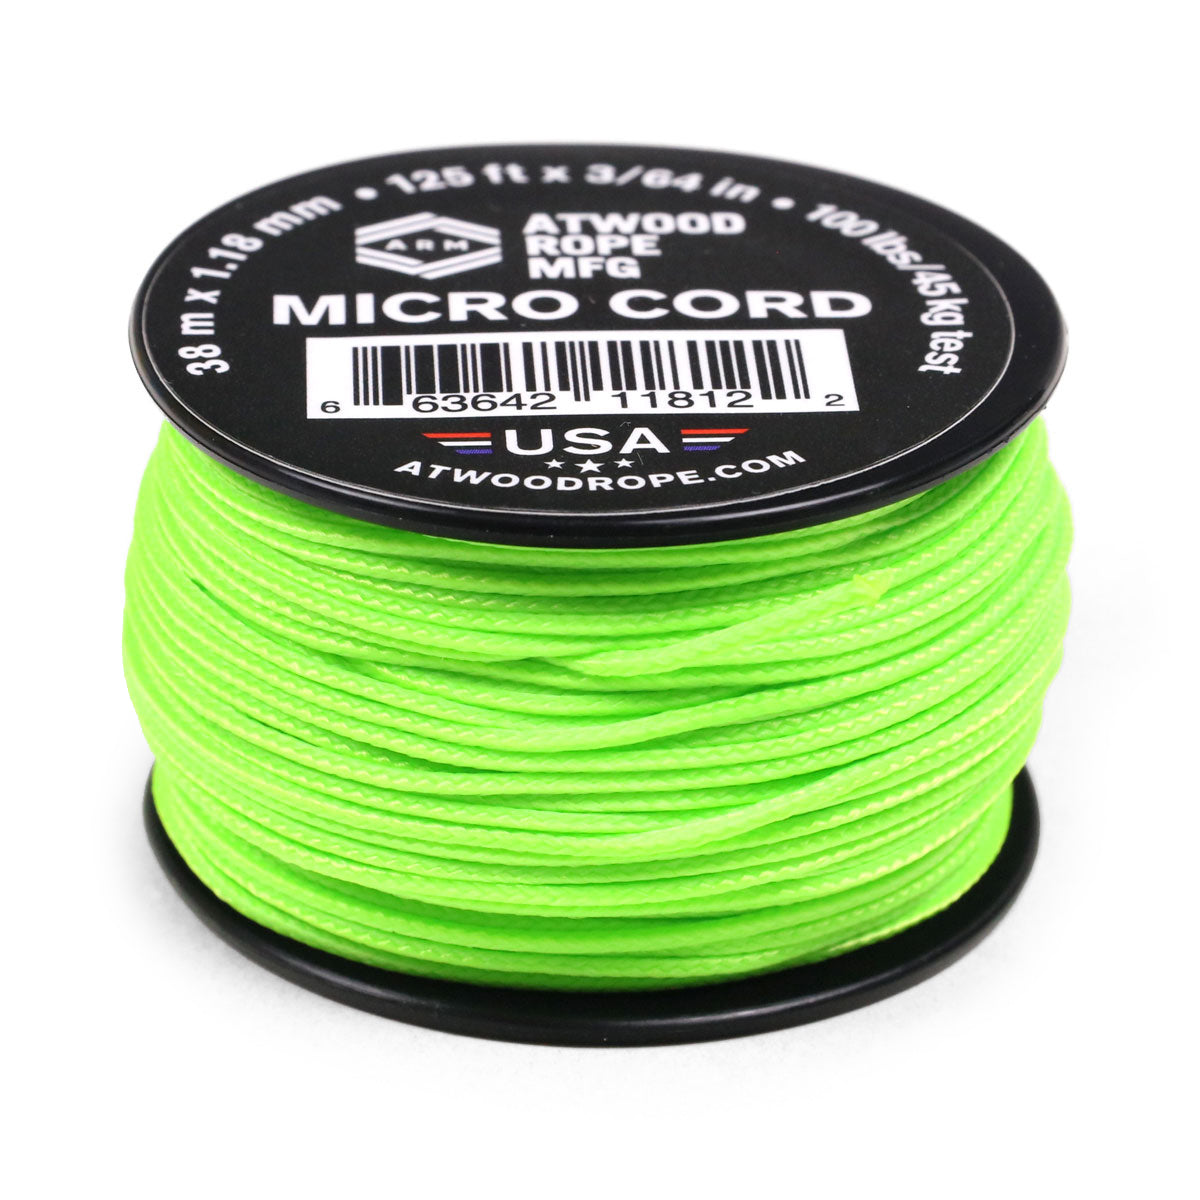 1.18mm Micro Cord - Neon Green